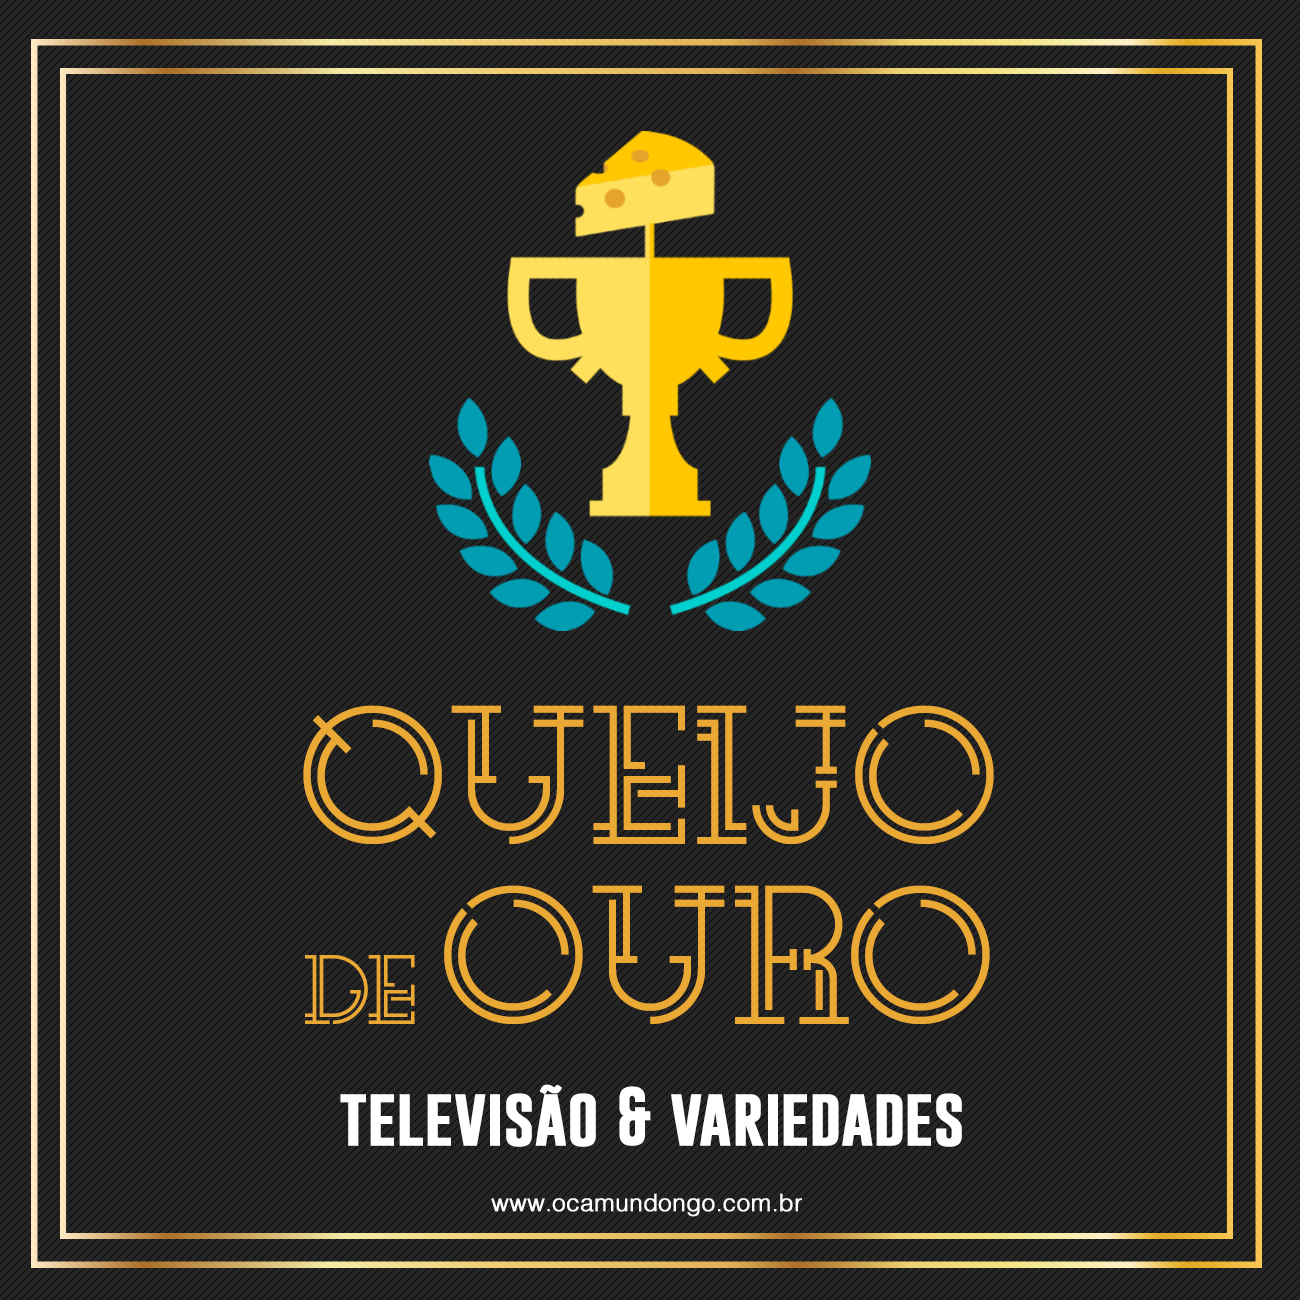 queijo-de-ouro-2016-vencedores-televisao-inicio-camundongo